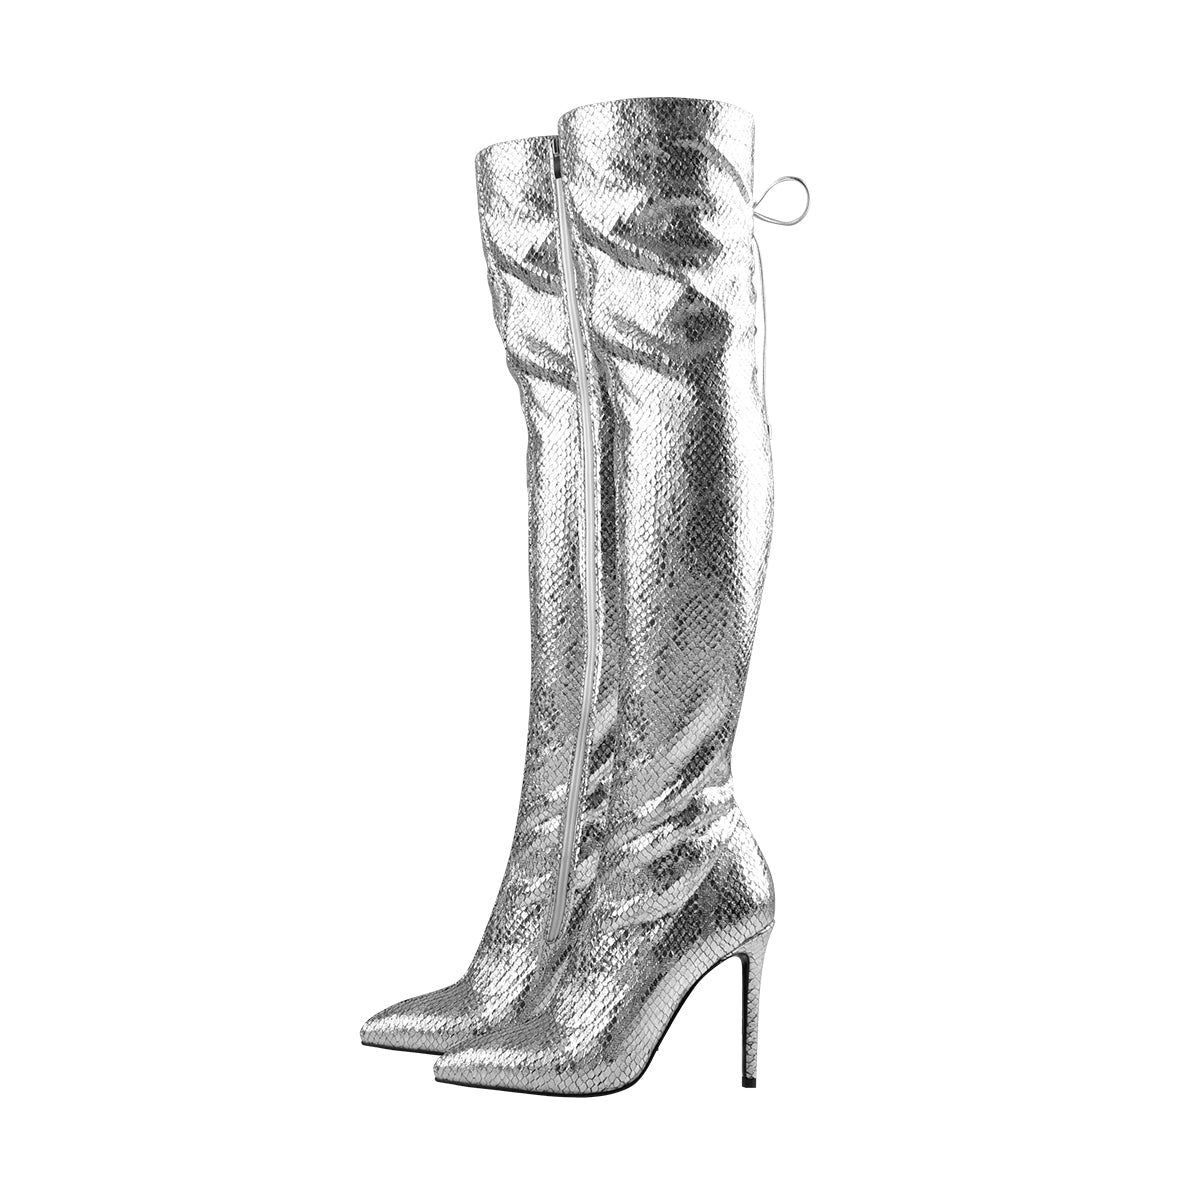 thigh high metallic silver boots